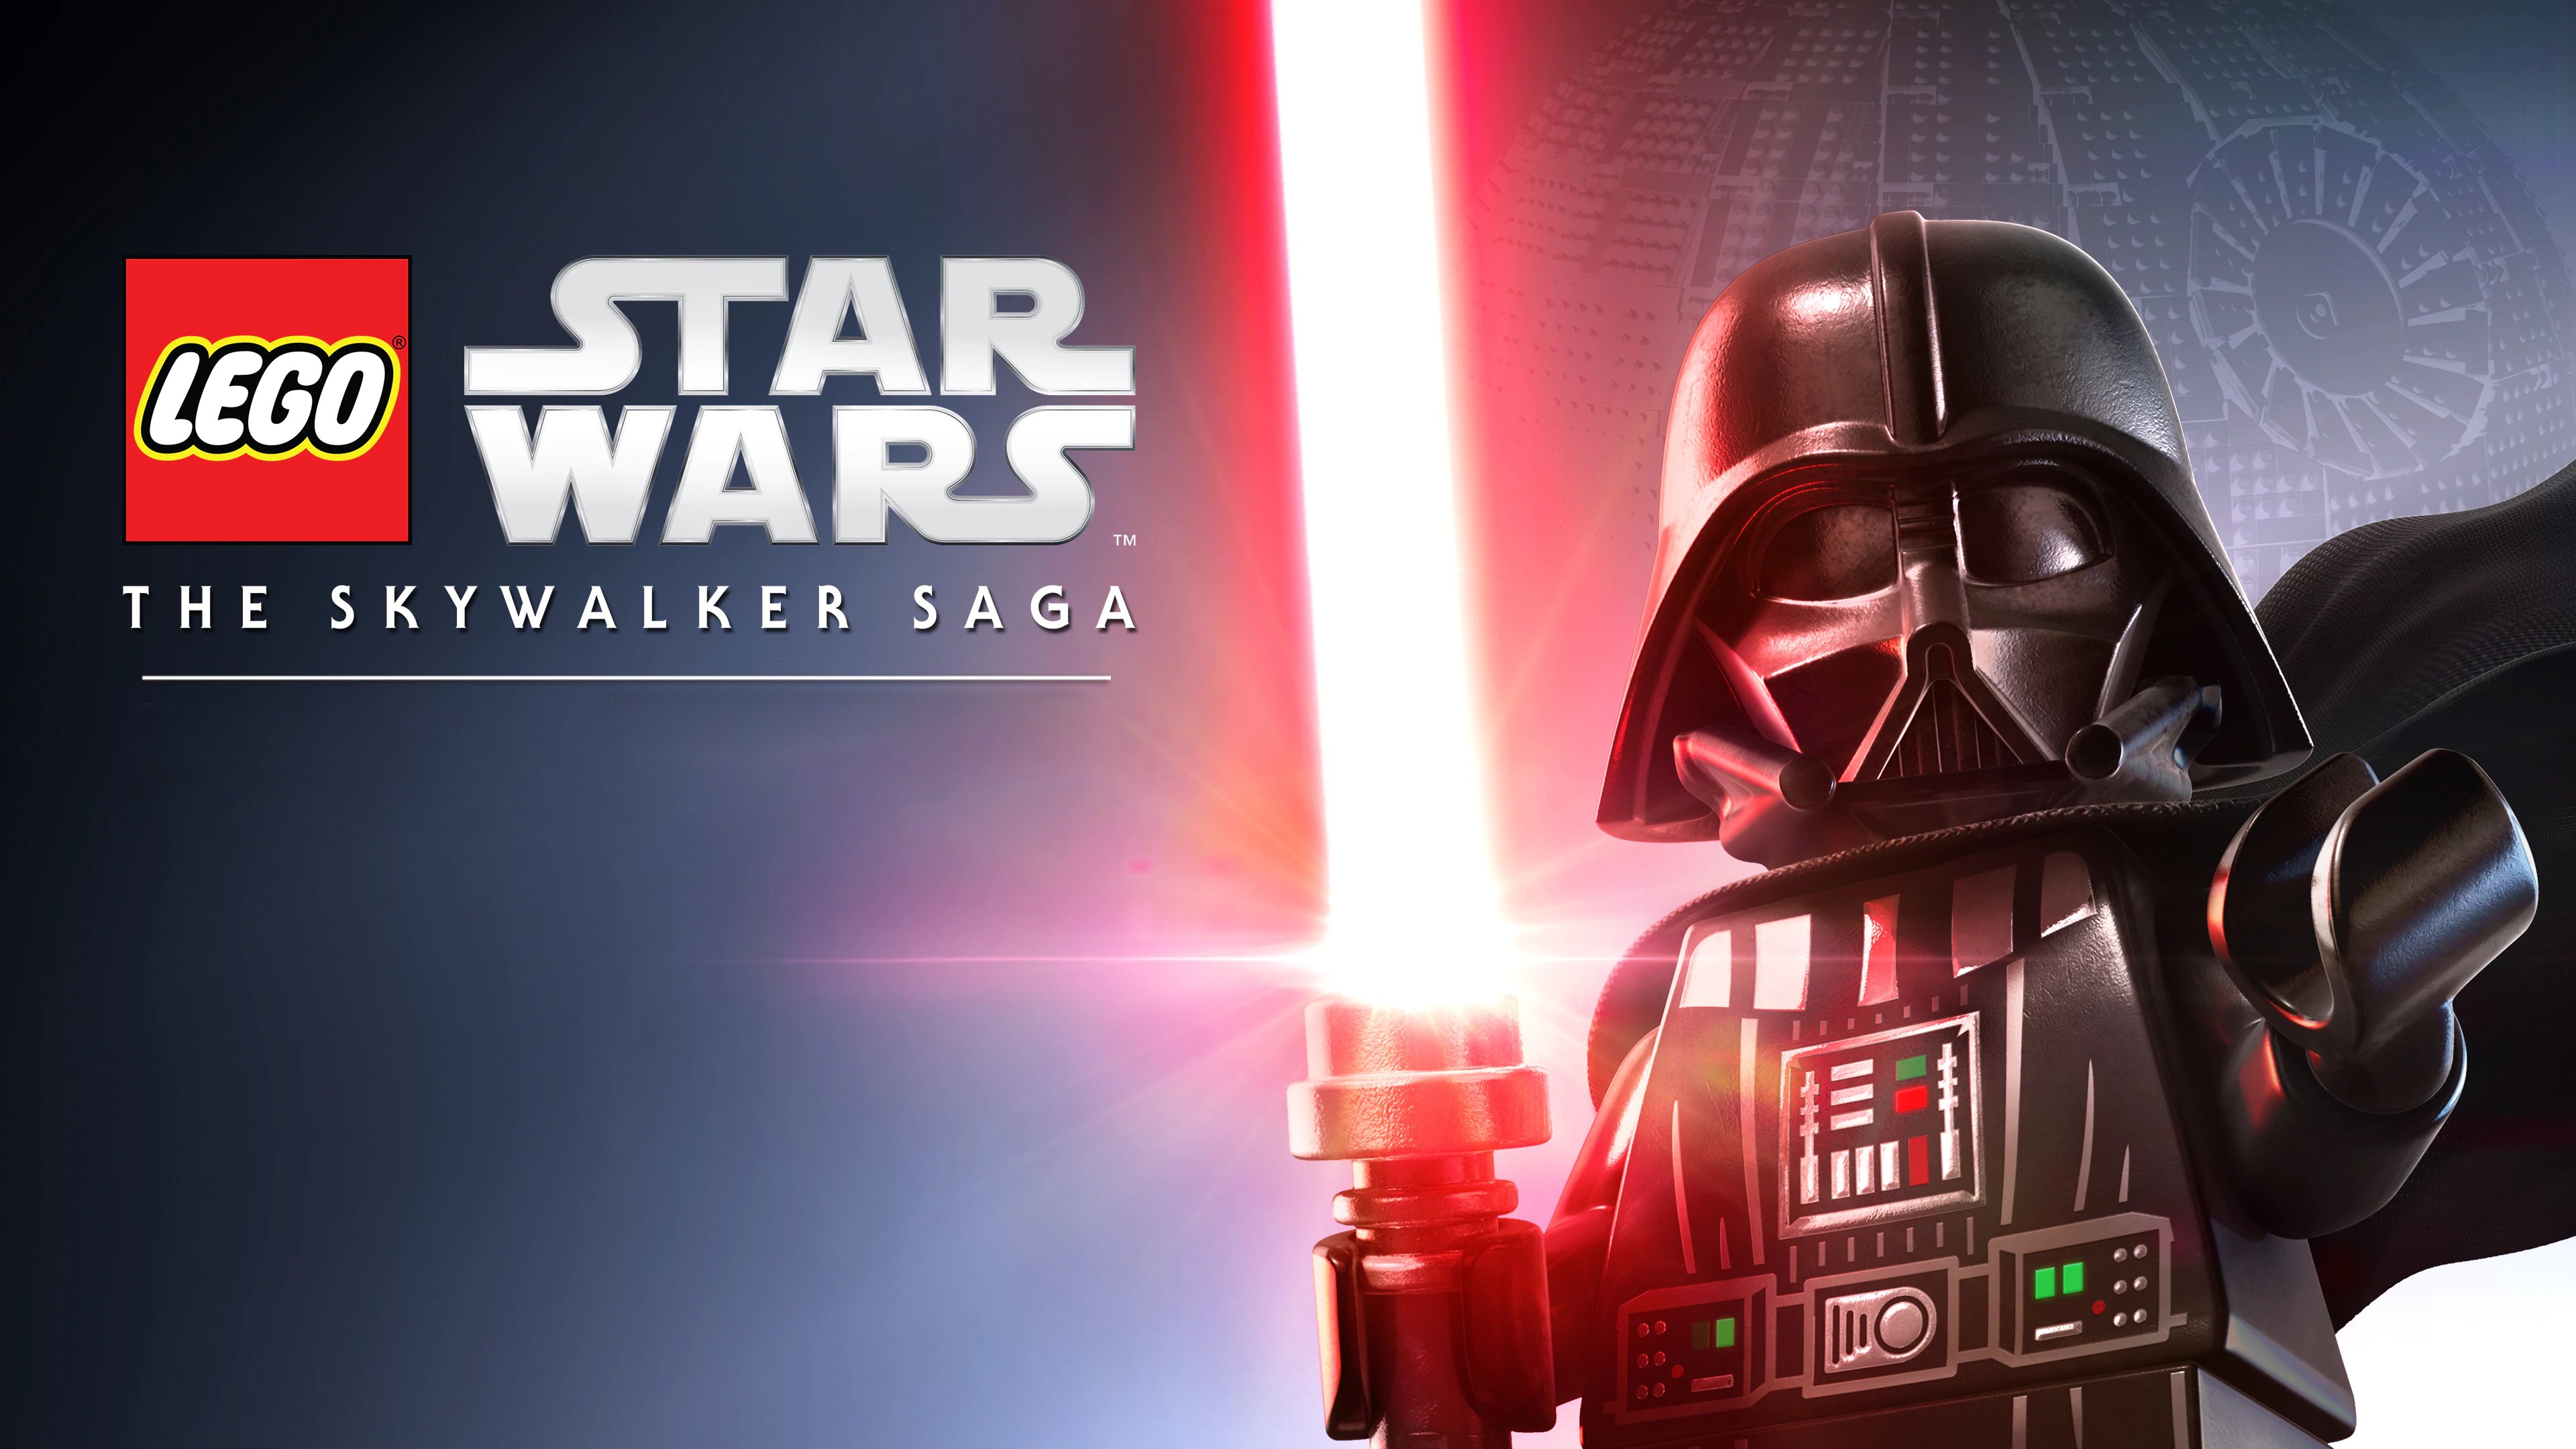 Download Lego Star Wars: The Skywalker Saga wallpaper for mobile phone, free Lego Star Wars: The Skywalker Saga HD picture